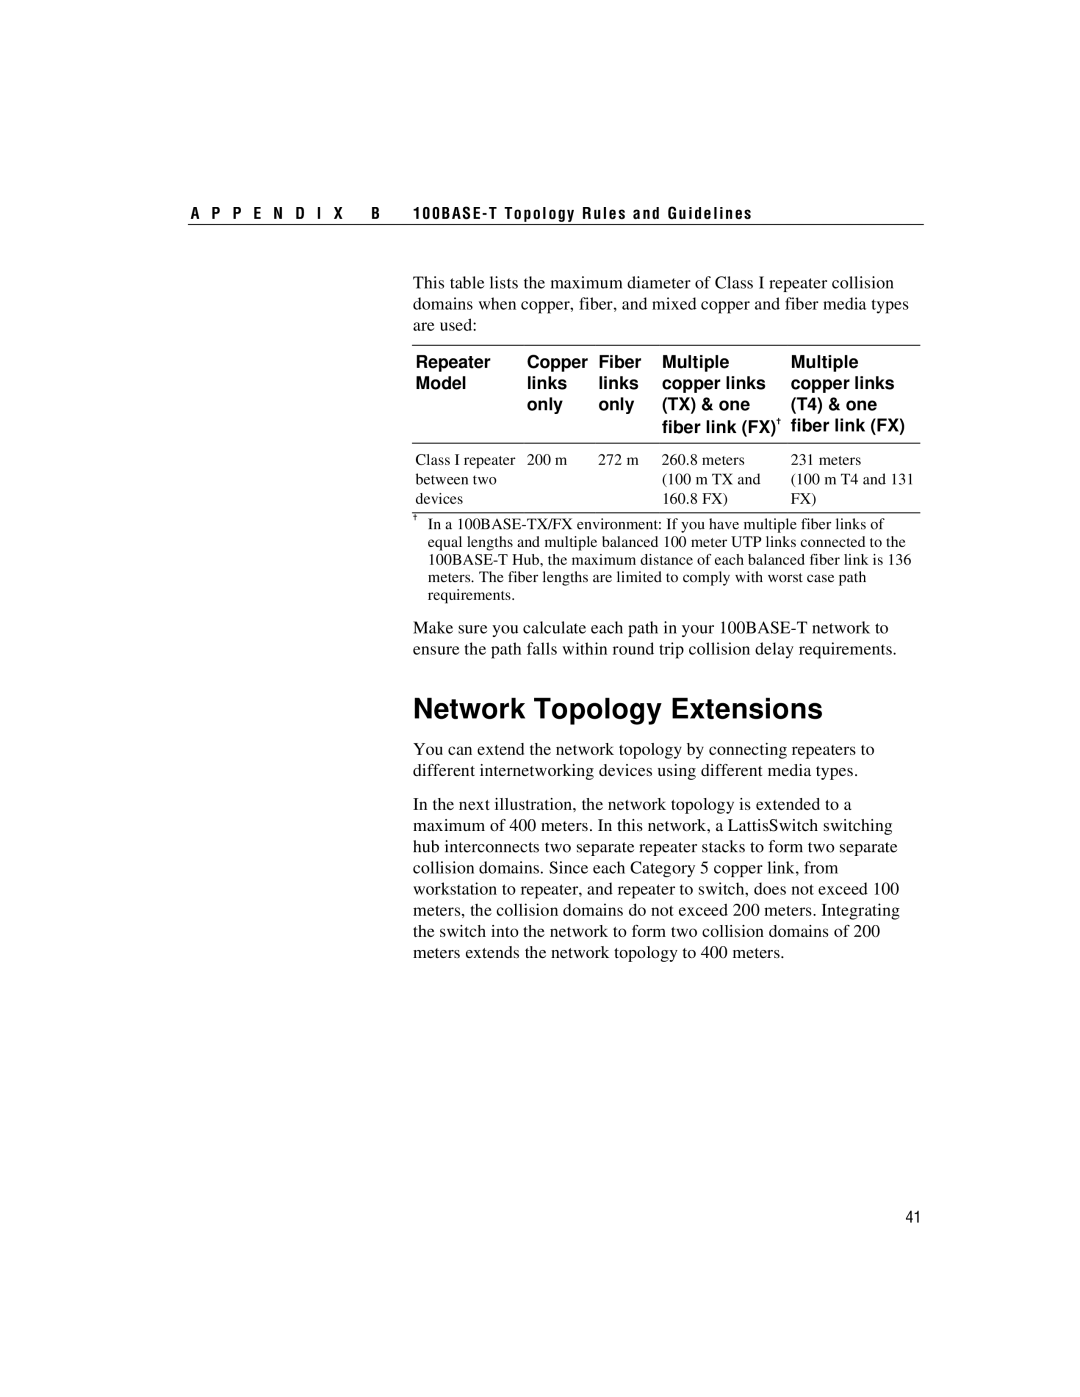 Intel 100BASE-TX manual Network Topology Extensions 